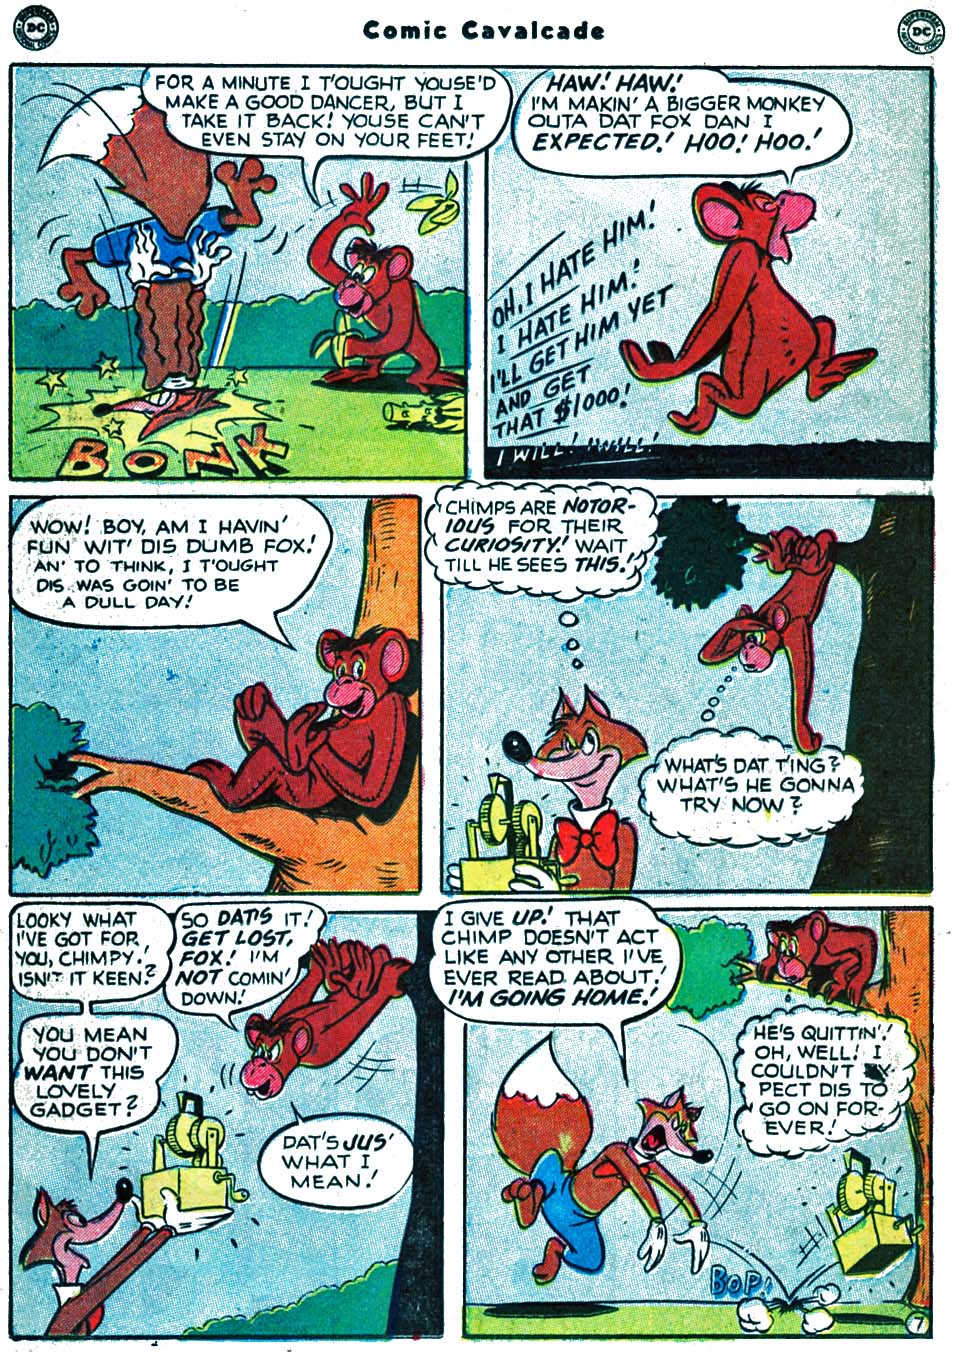 Comic Cavalcade issue 42 - Page 9